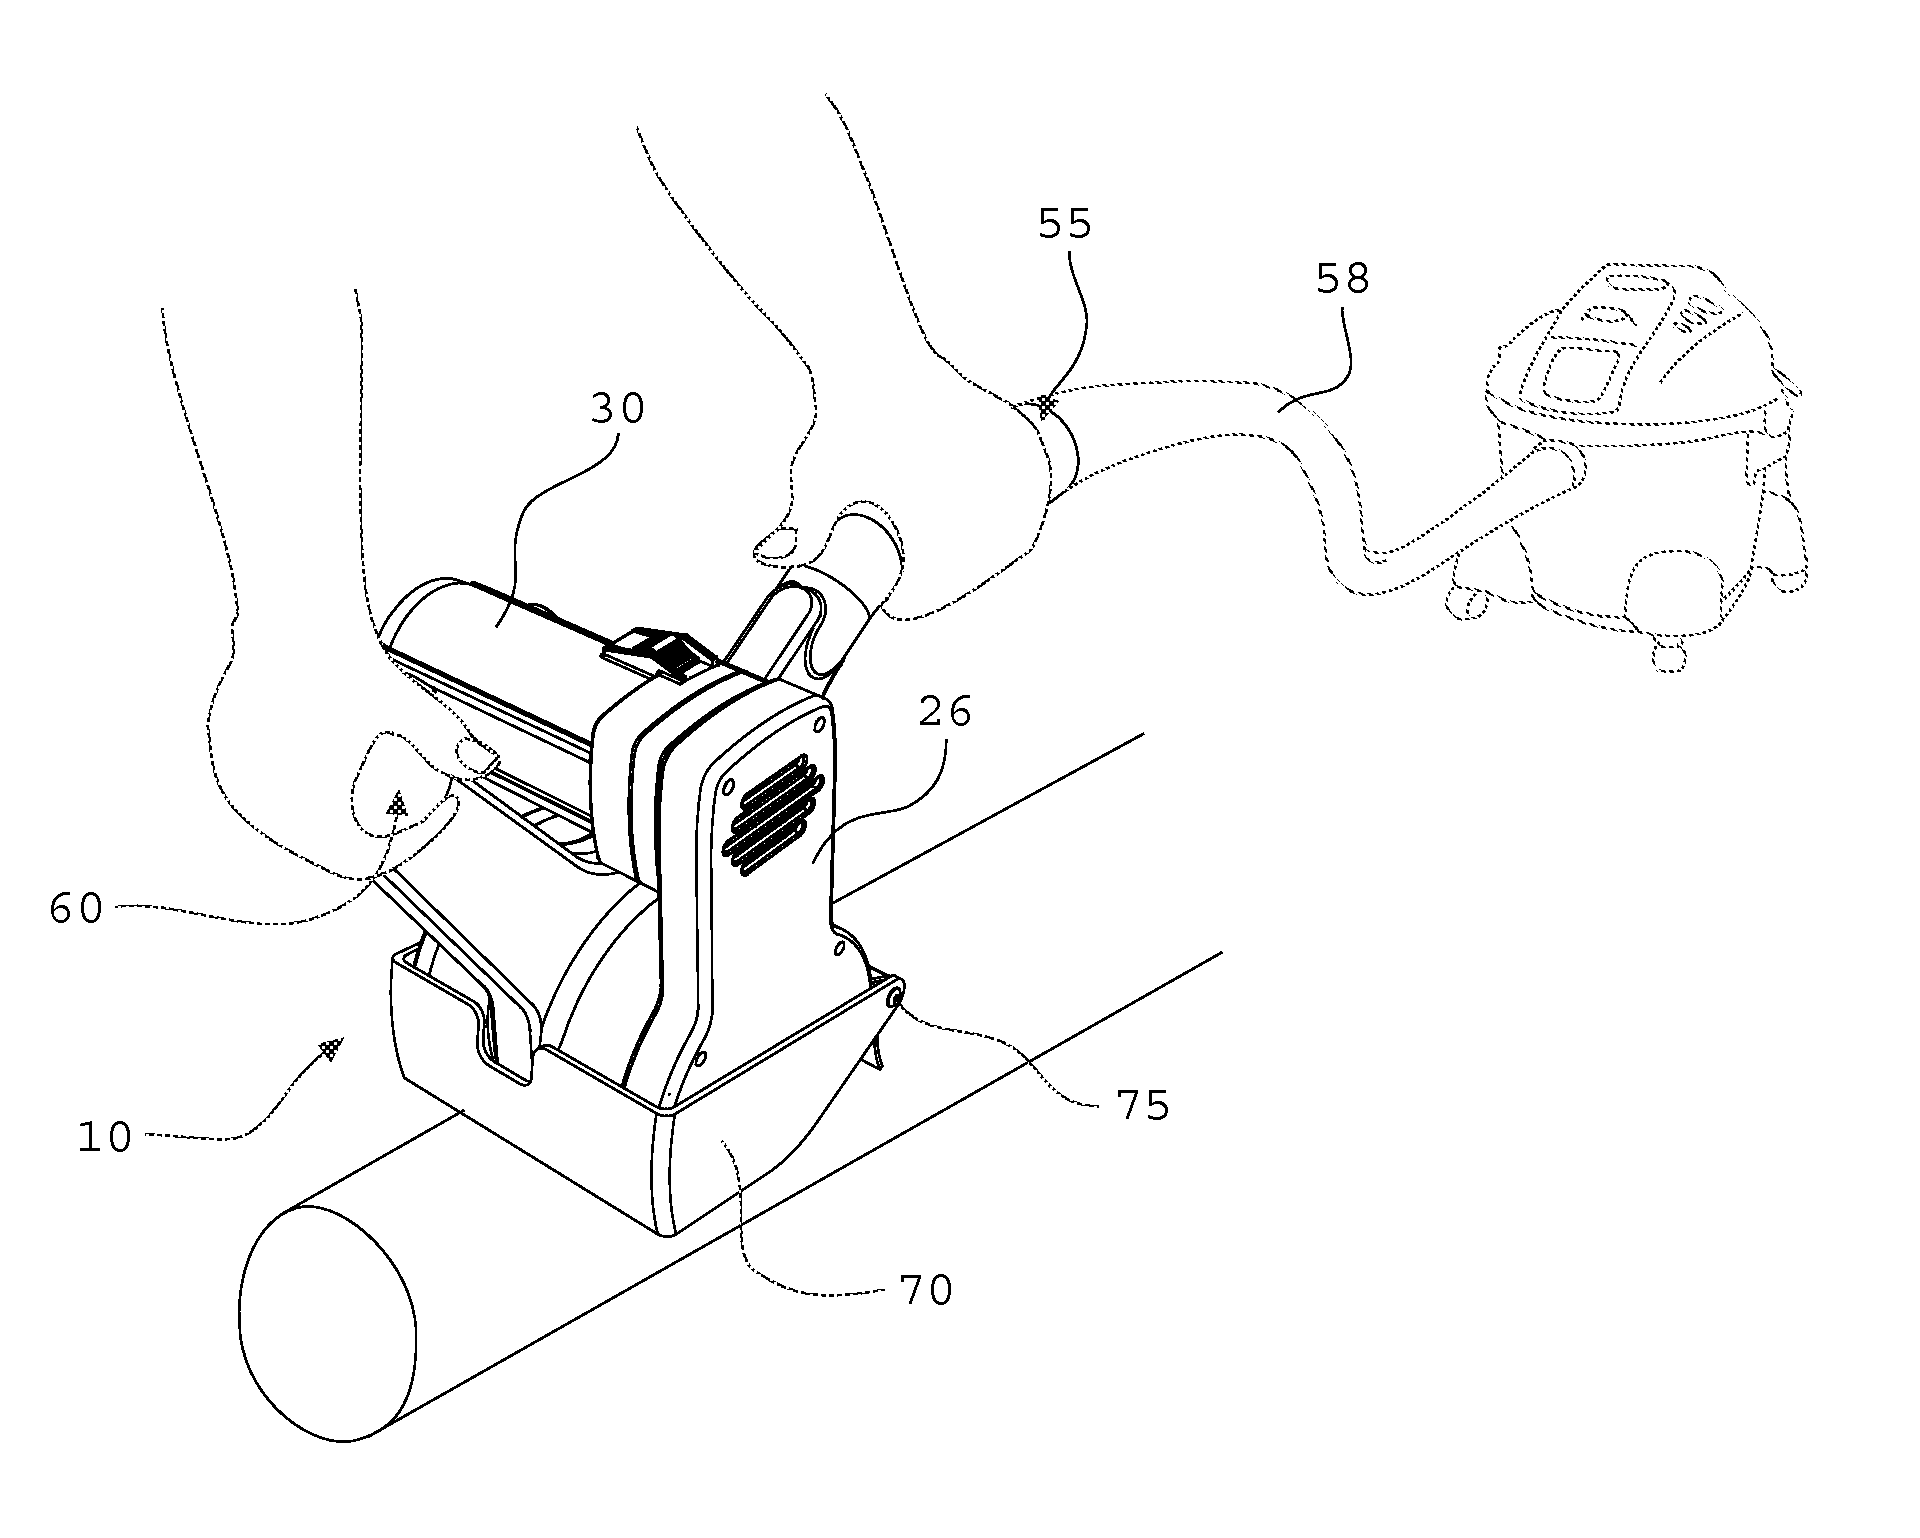 Surface preparation apparatus